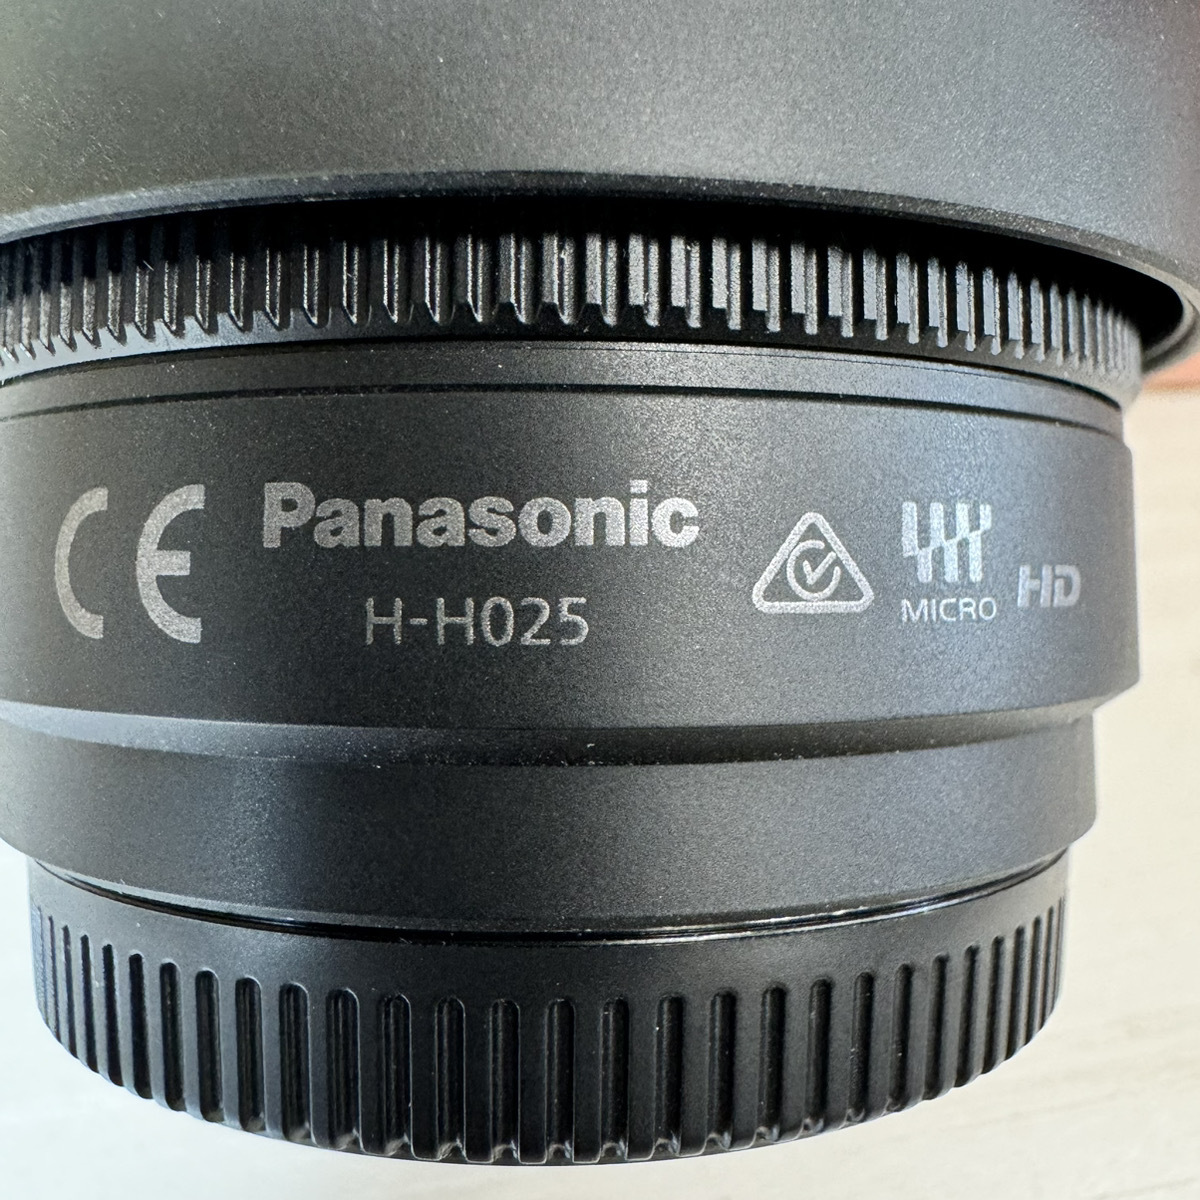 4690-01*Panasonic Panasonic LUMIX Lumix single burnt point lens ASPH. H-H025-K black camera lens *